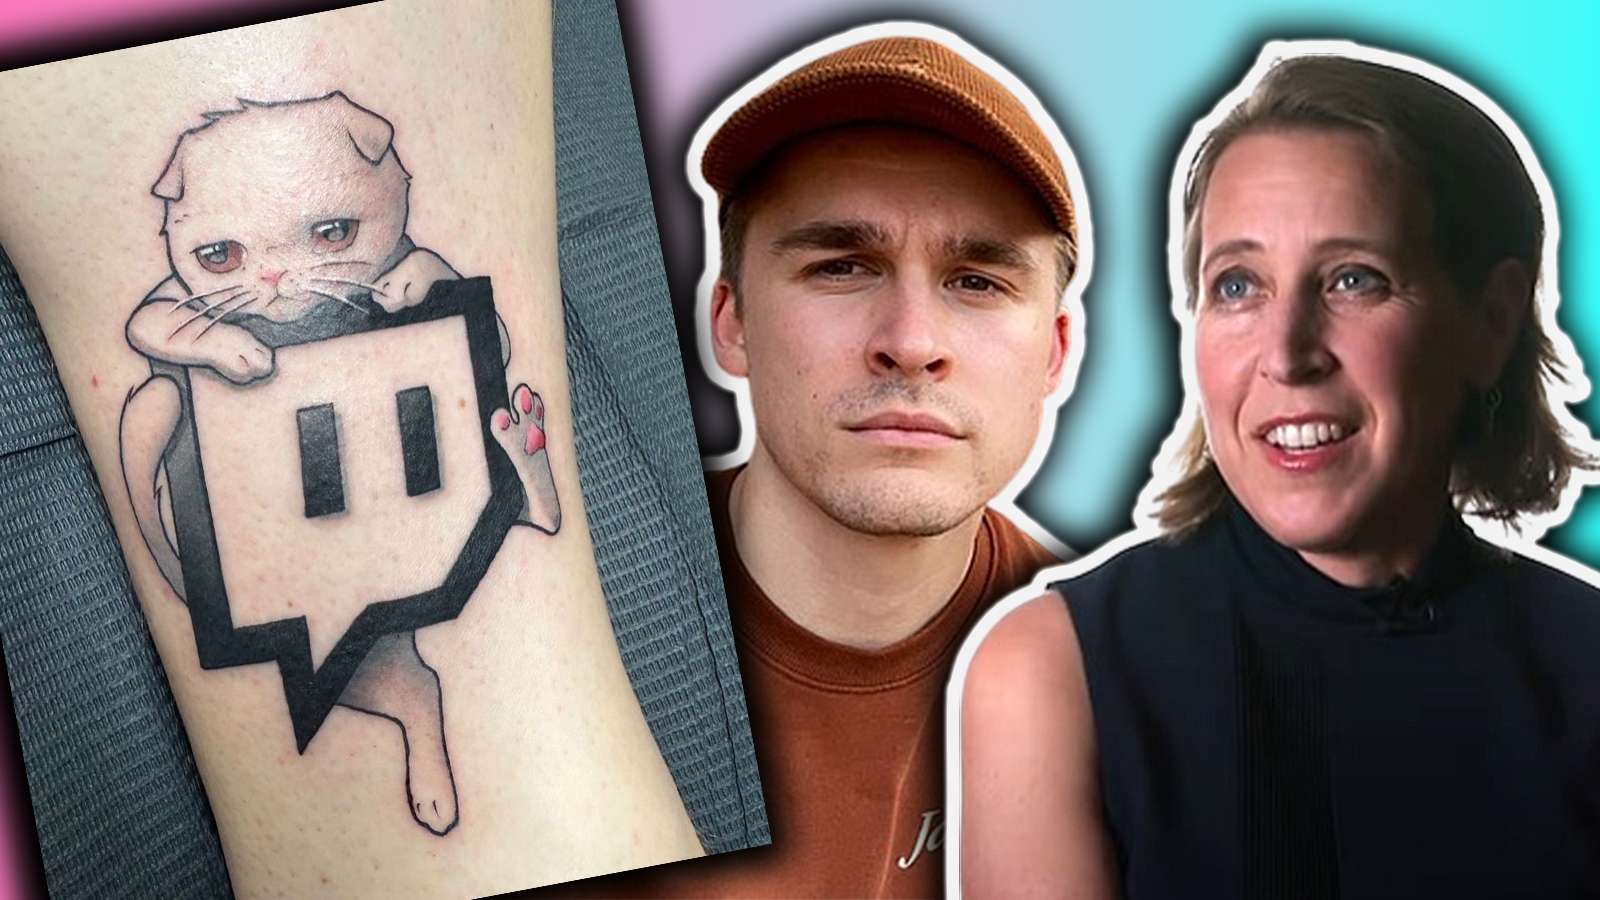 YouTube CEO responds to Ludwigs twitch logo tattoo